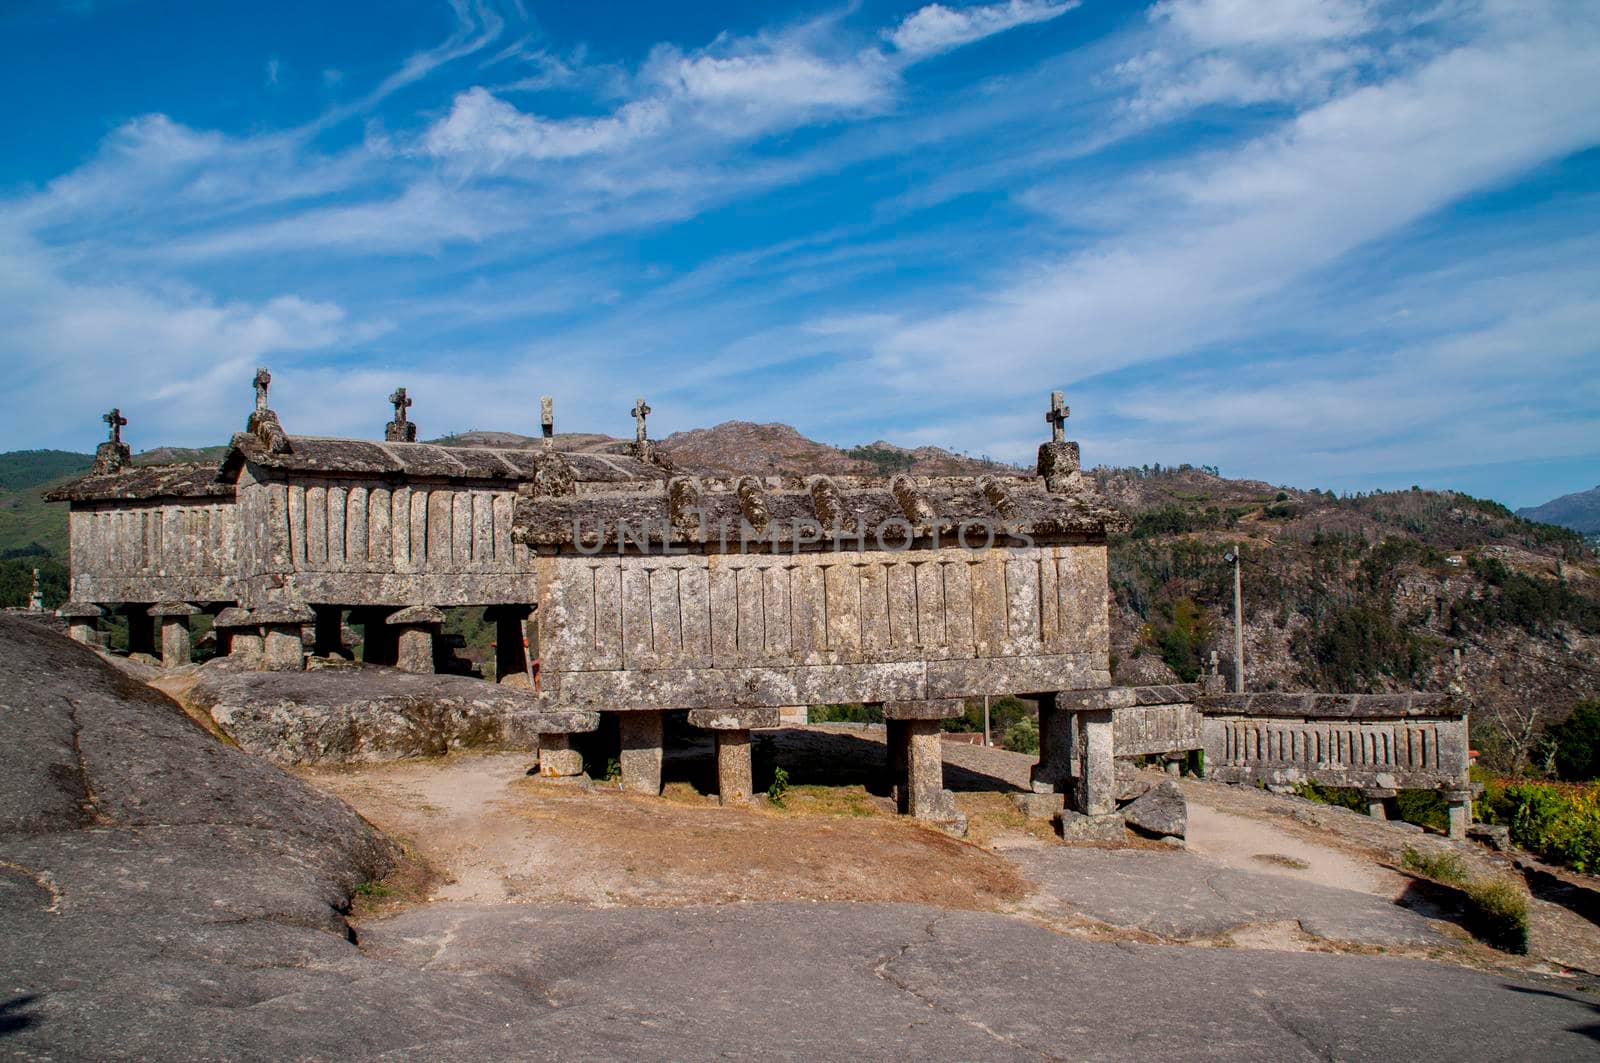 Old typical granite granary near Soajo, in the north of Portugal.